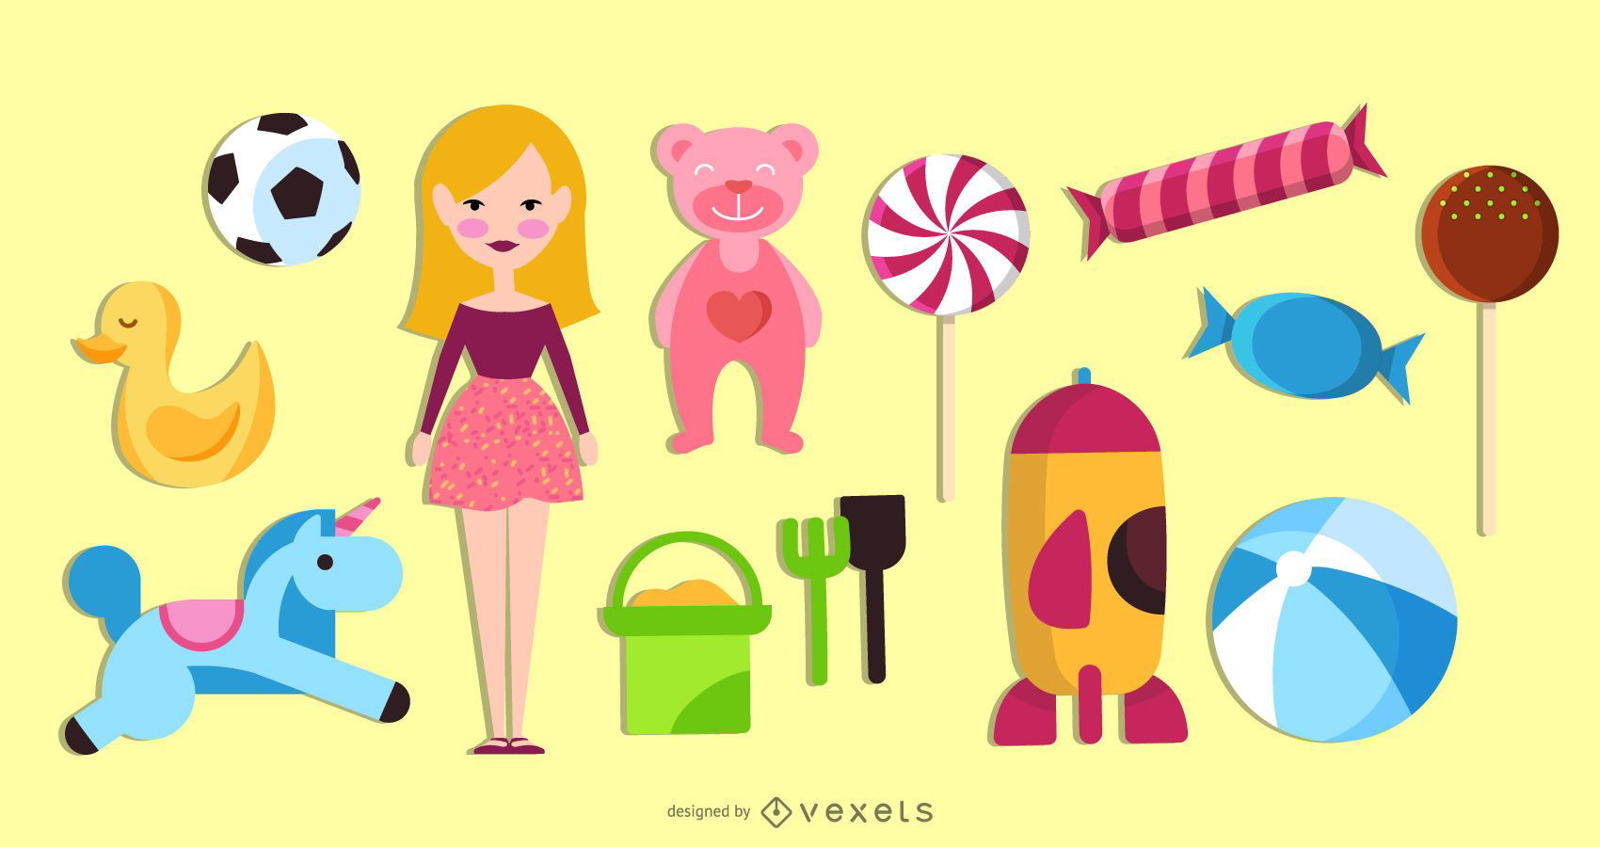  A variety of colorful objects for children, including a doll, a teddy bear, a soccer ball, a duck, a unicorn, a rocket, a beach ball, a shovel, a rake, a bucket, a lollipop, a candy cane, and a cupcake.